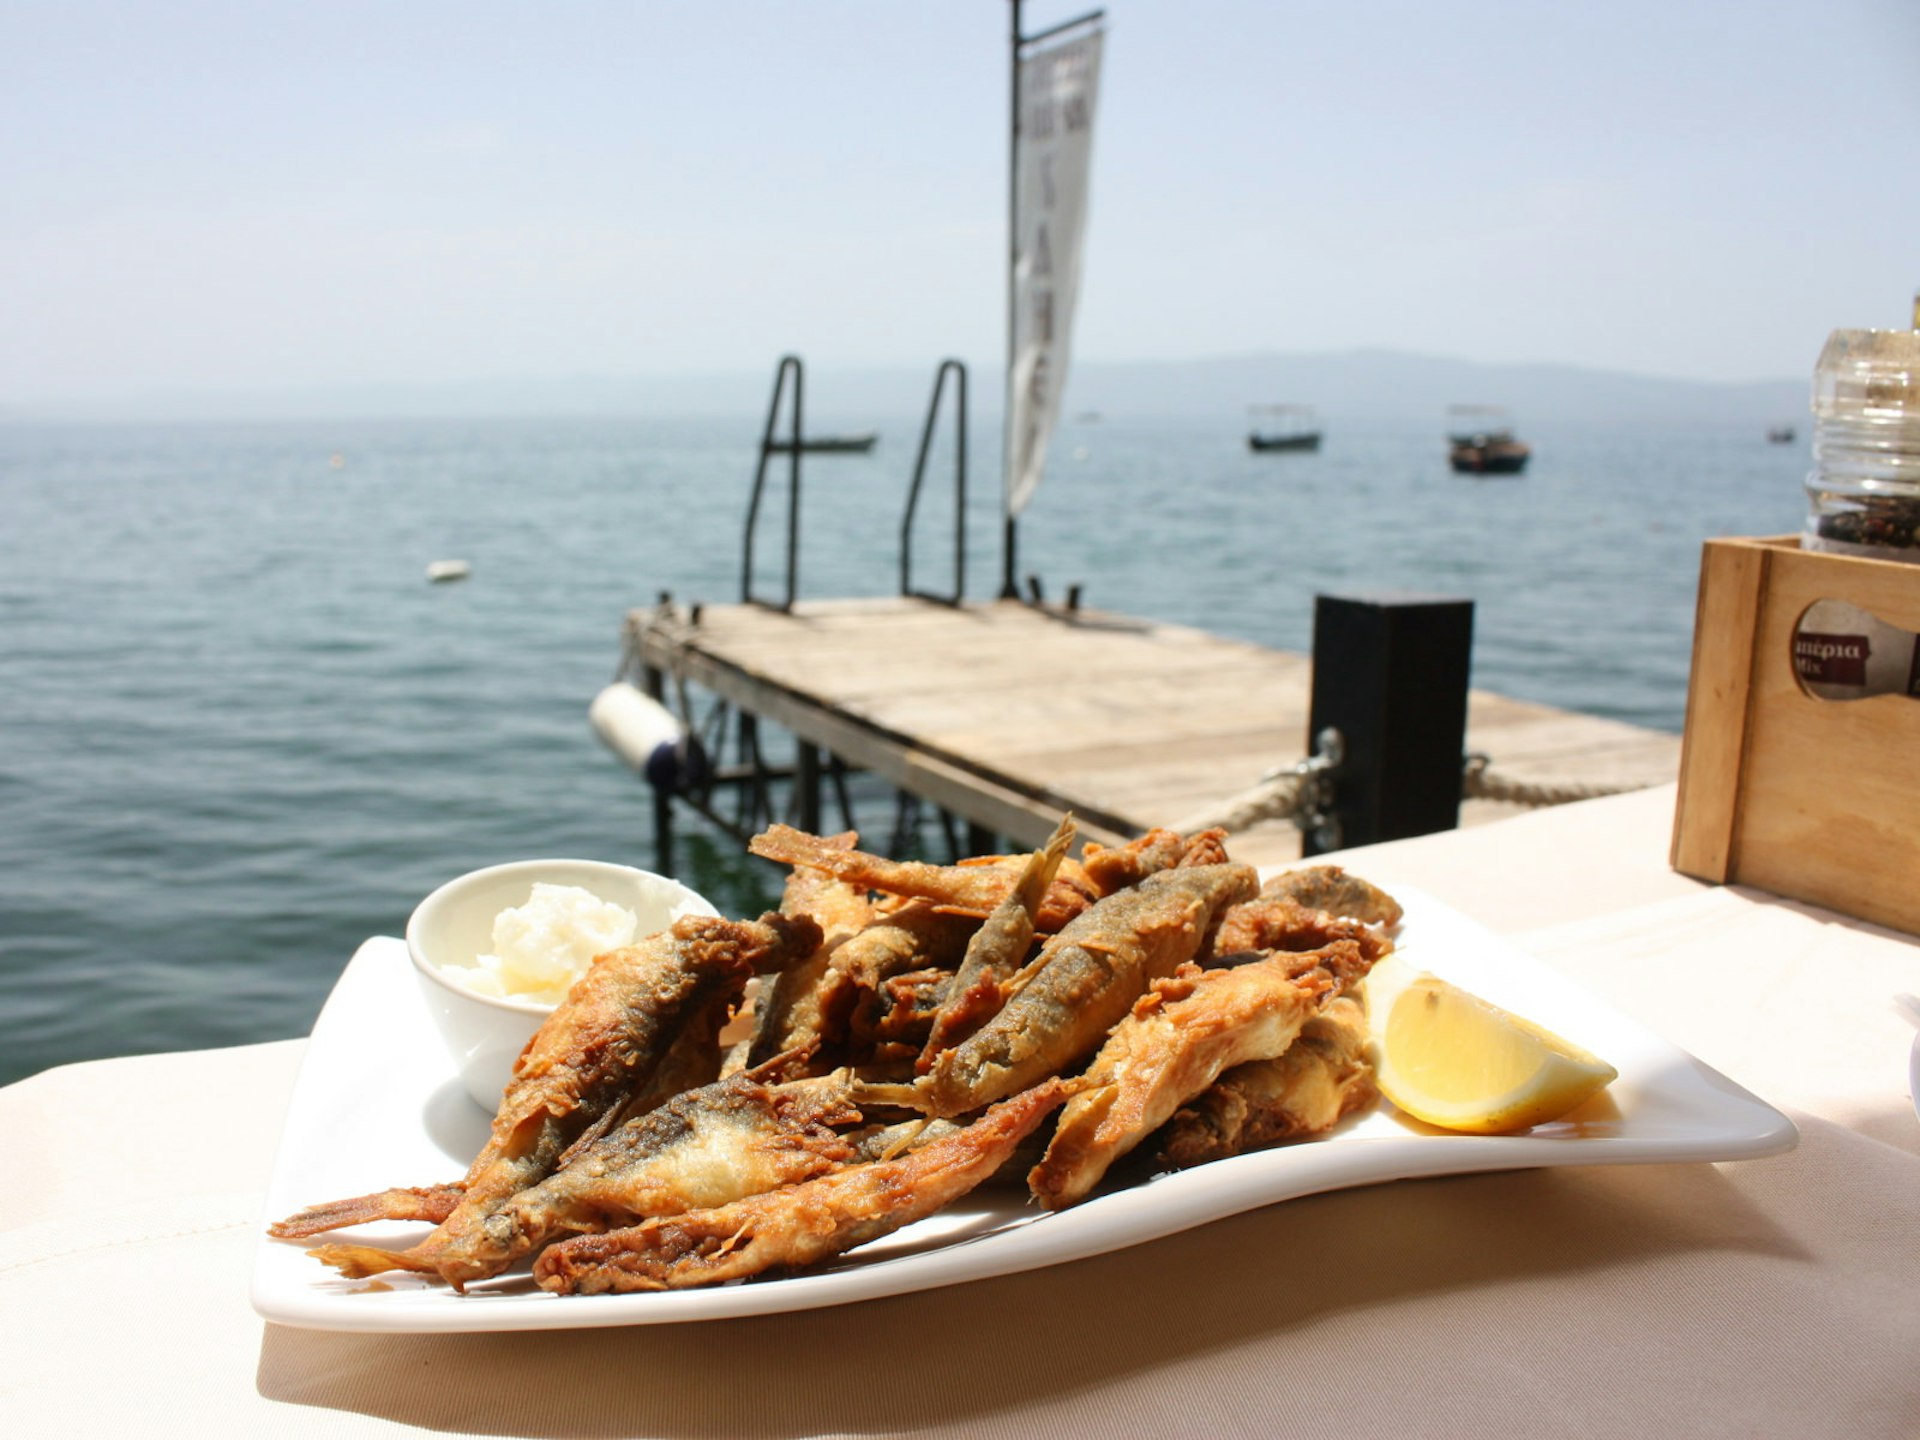 Plasnica fish lunch at Letna Bavča Kaneo © Lorna Parkes / Lonely Planet